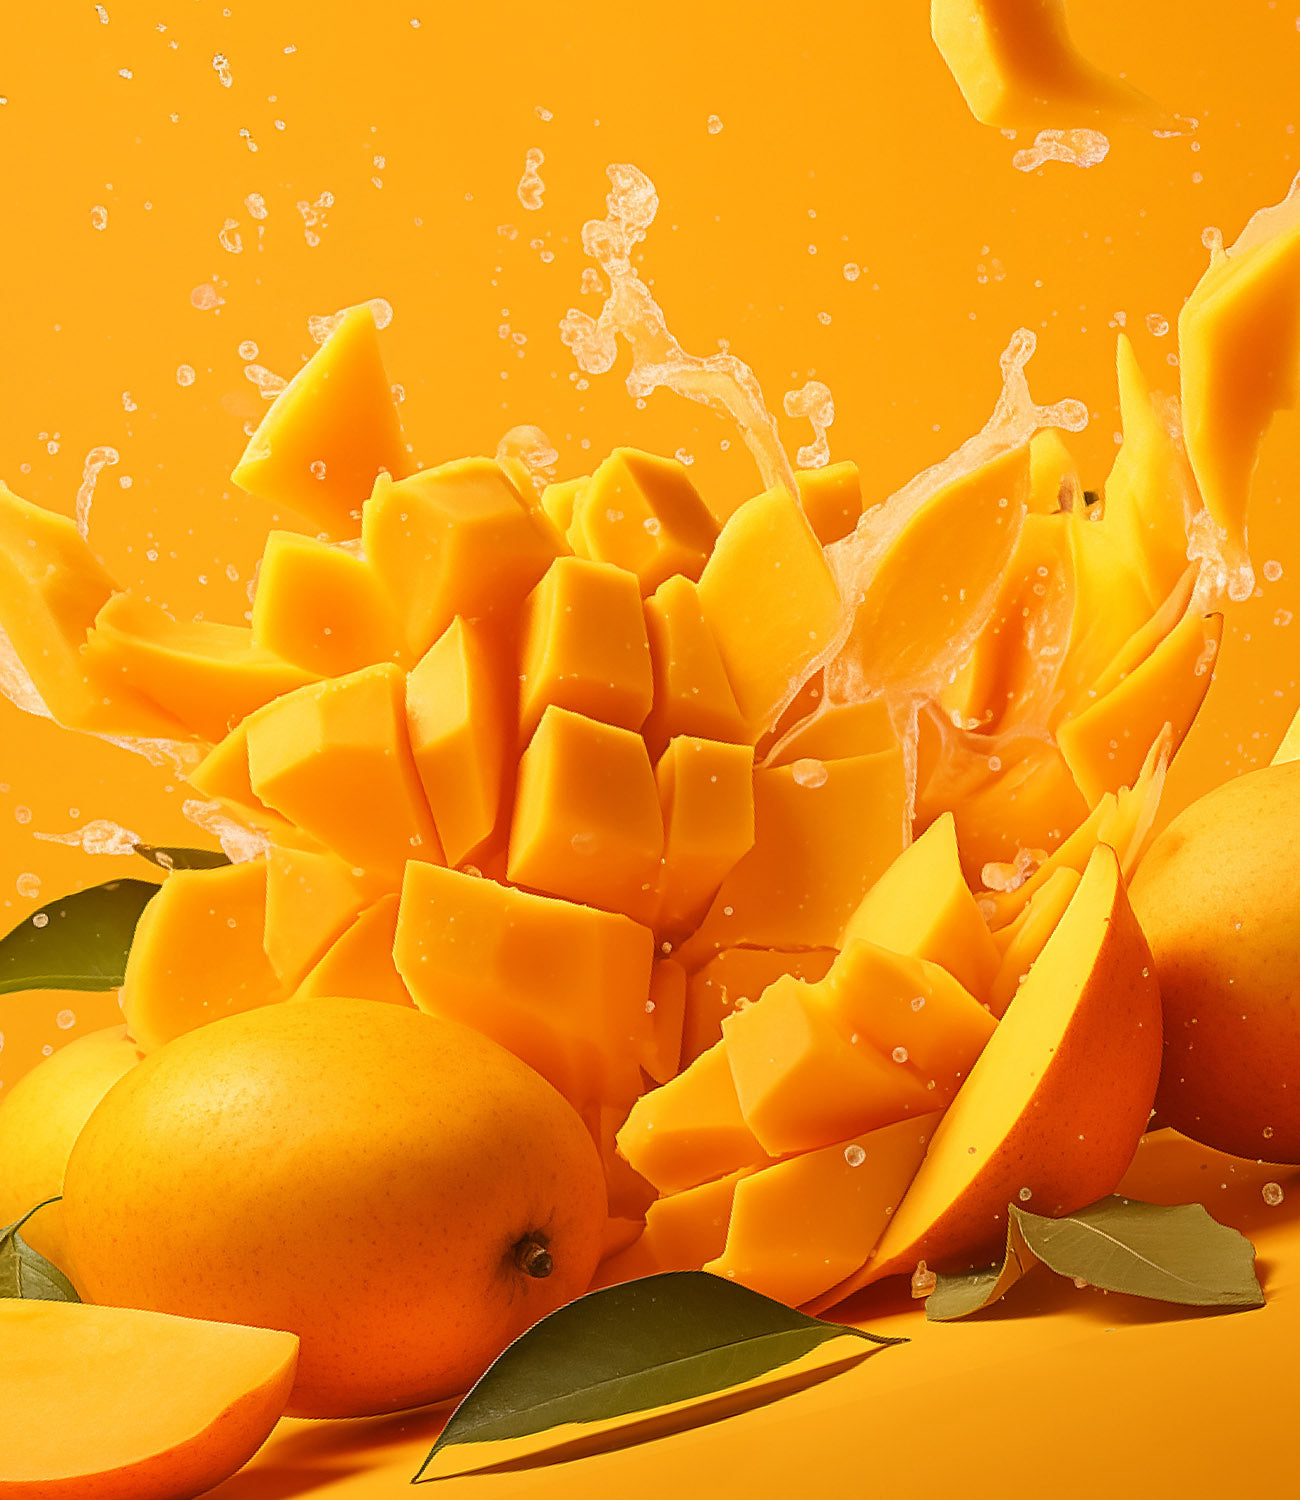 Delicious mangos bursting into small pieces